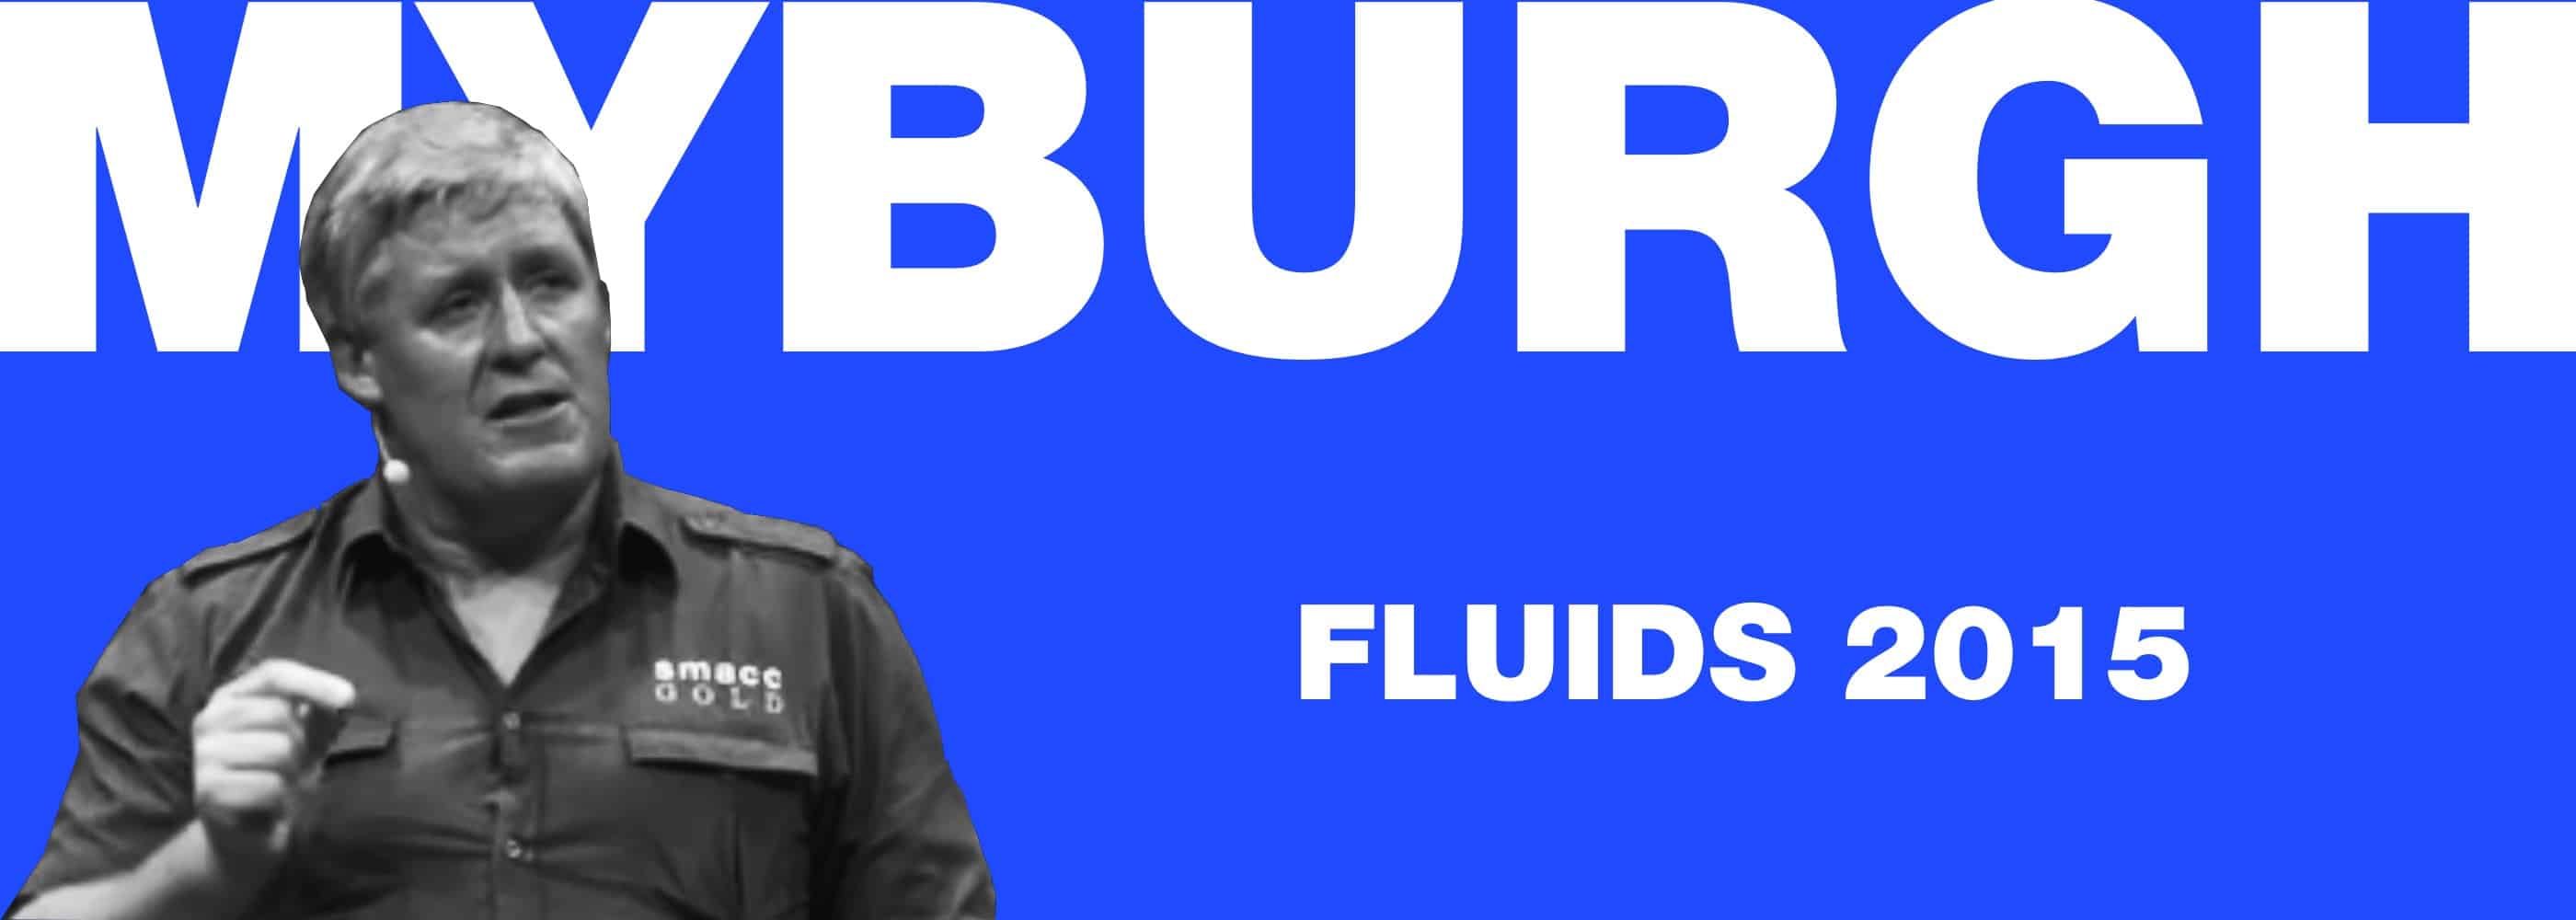 myburgh fluids